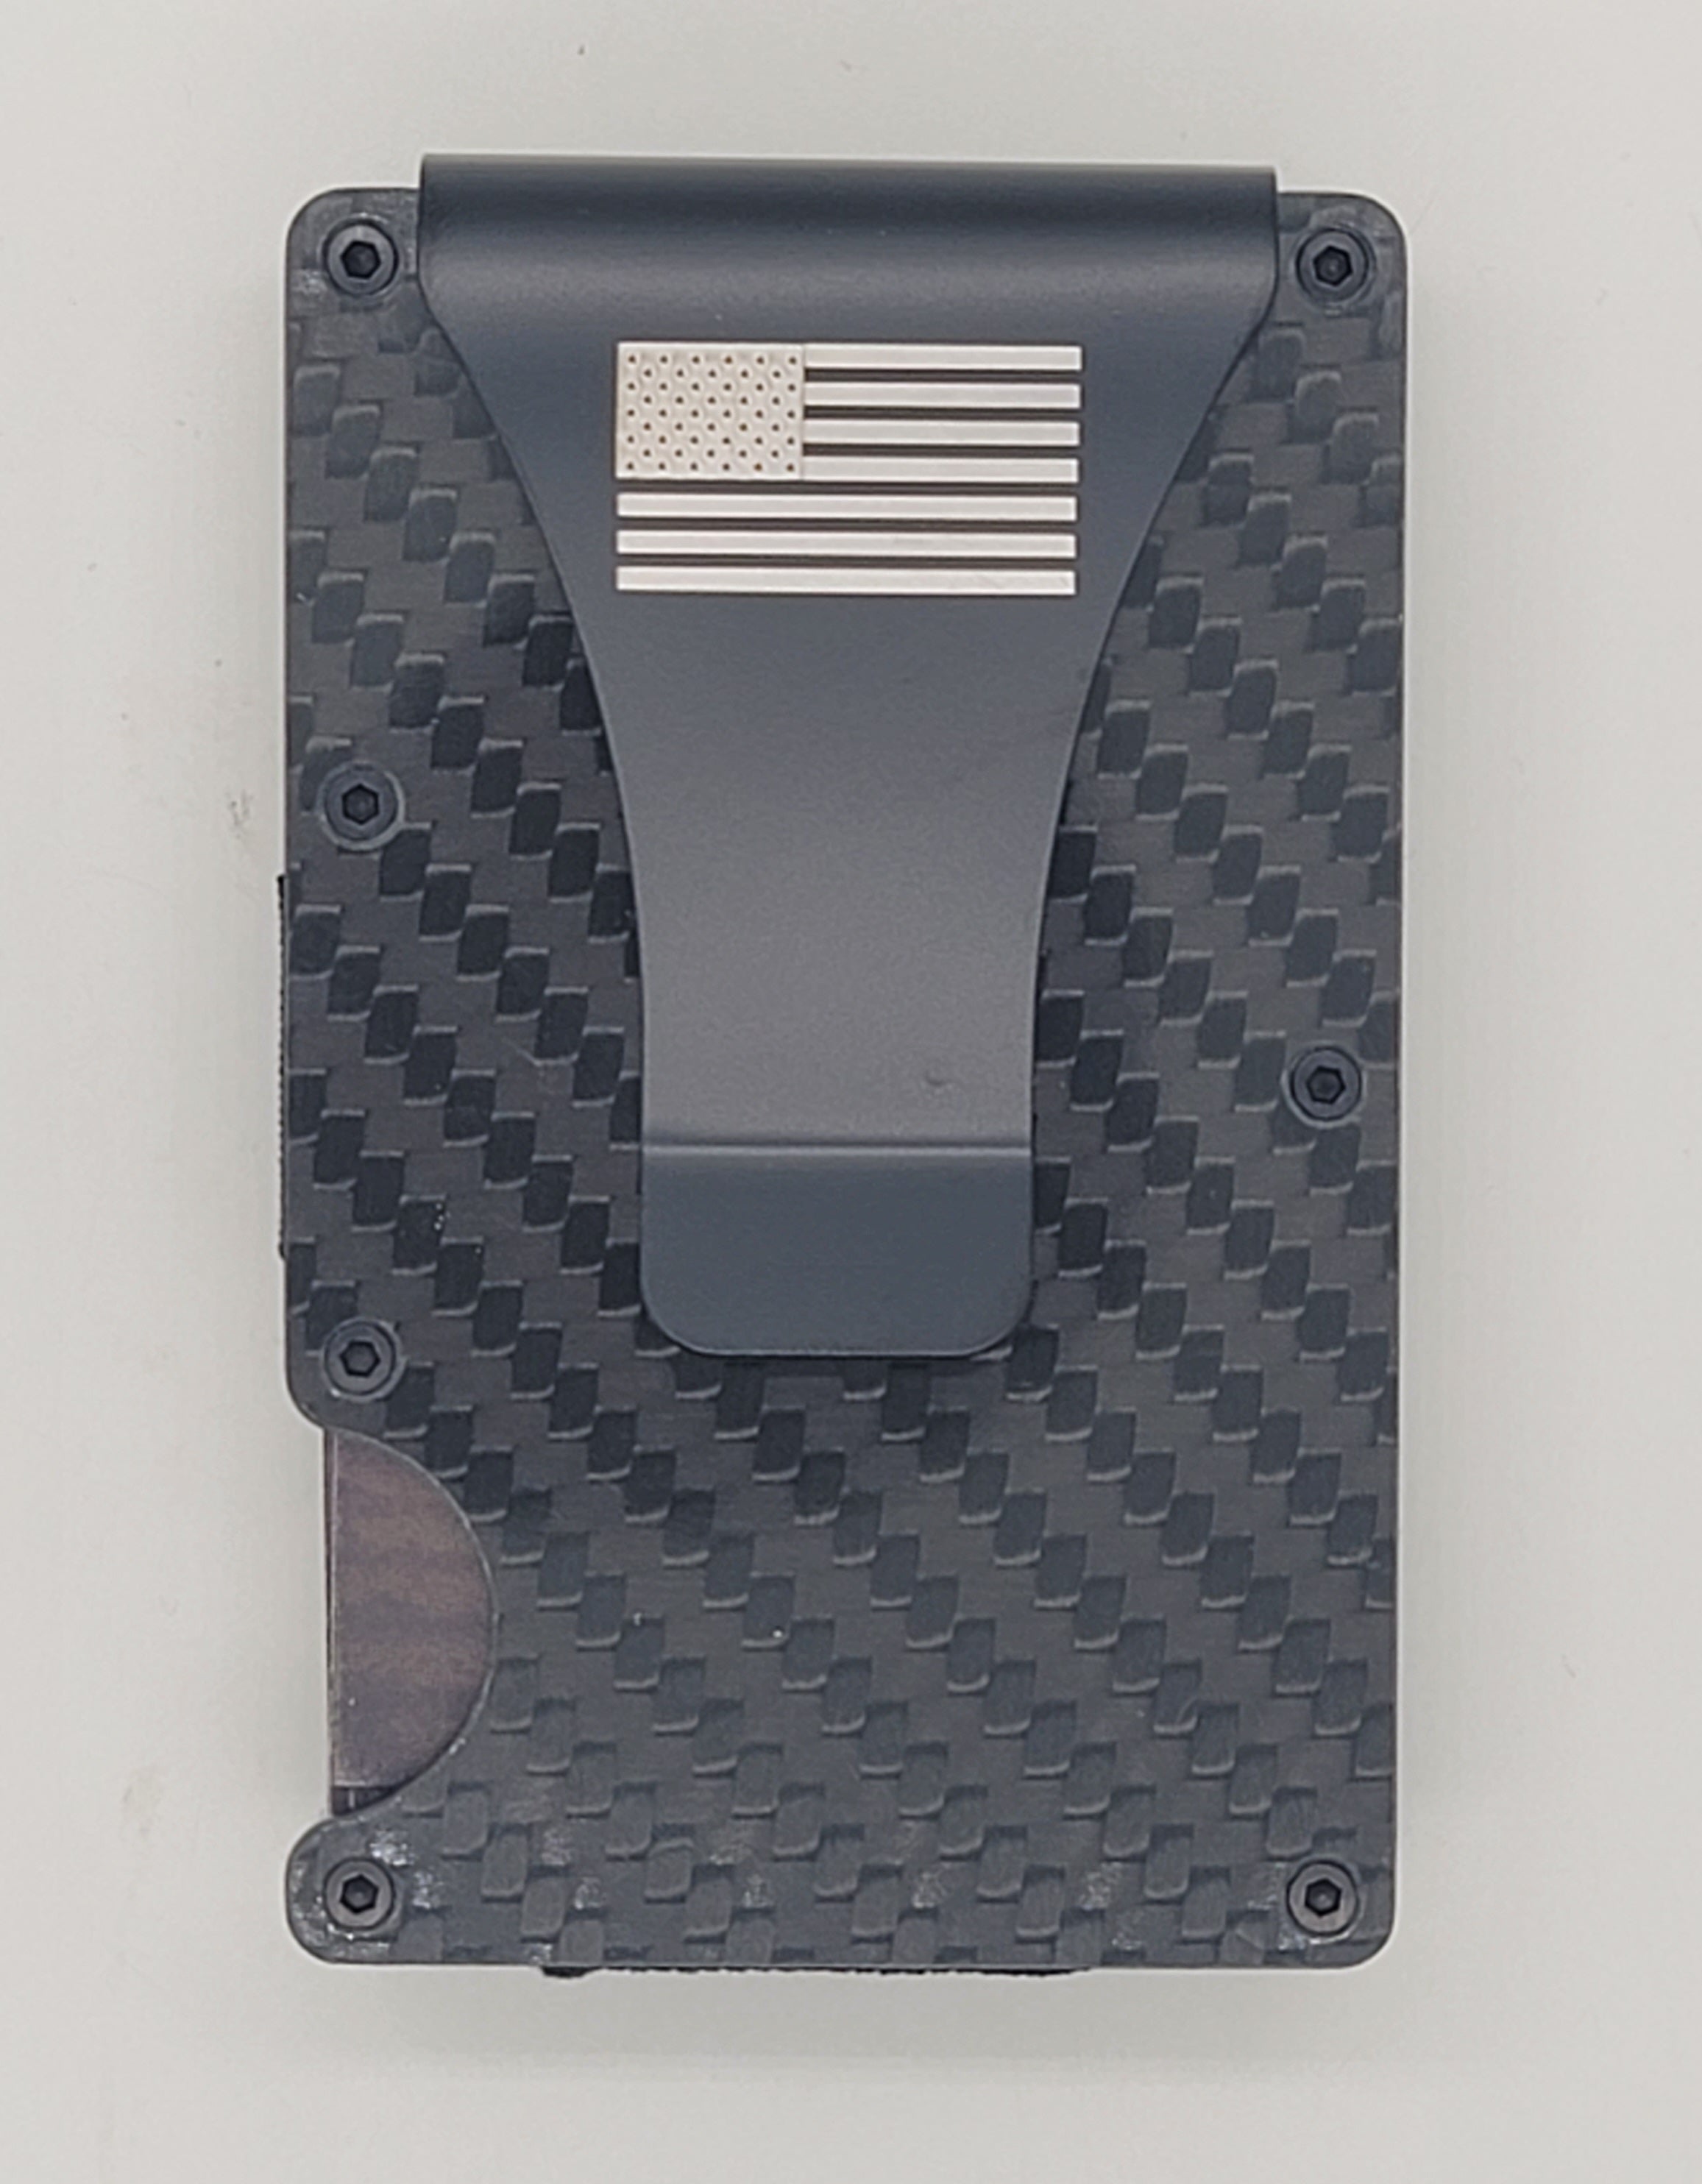 Carbon Fiber Slim Wallet & Key Organizer - Credit Card Case - RFID Metal Wallet